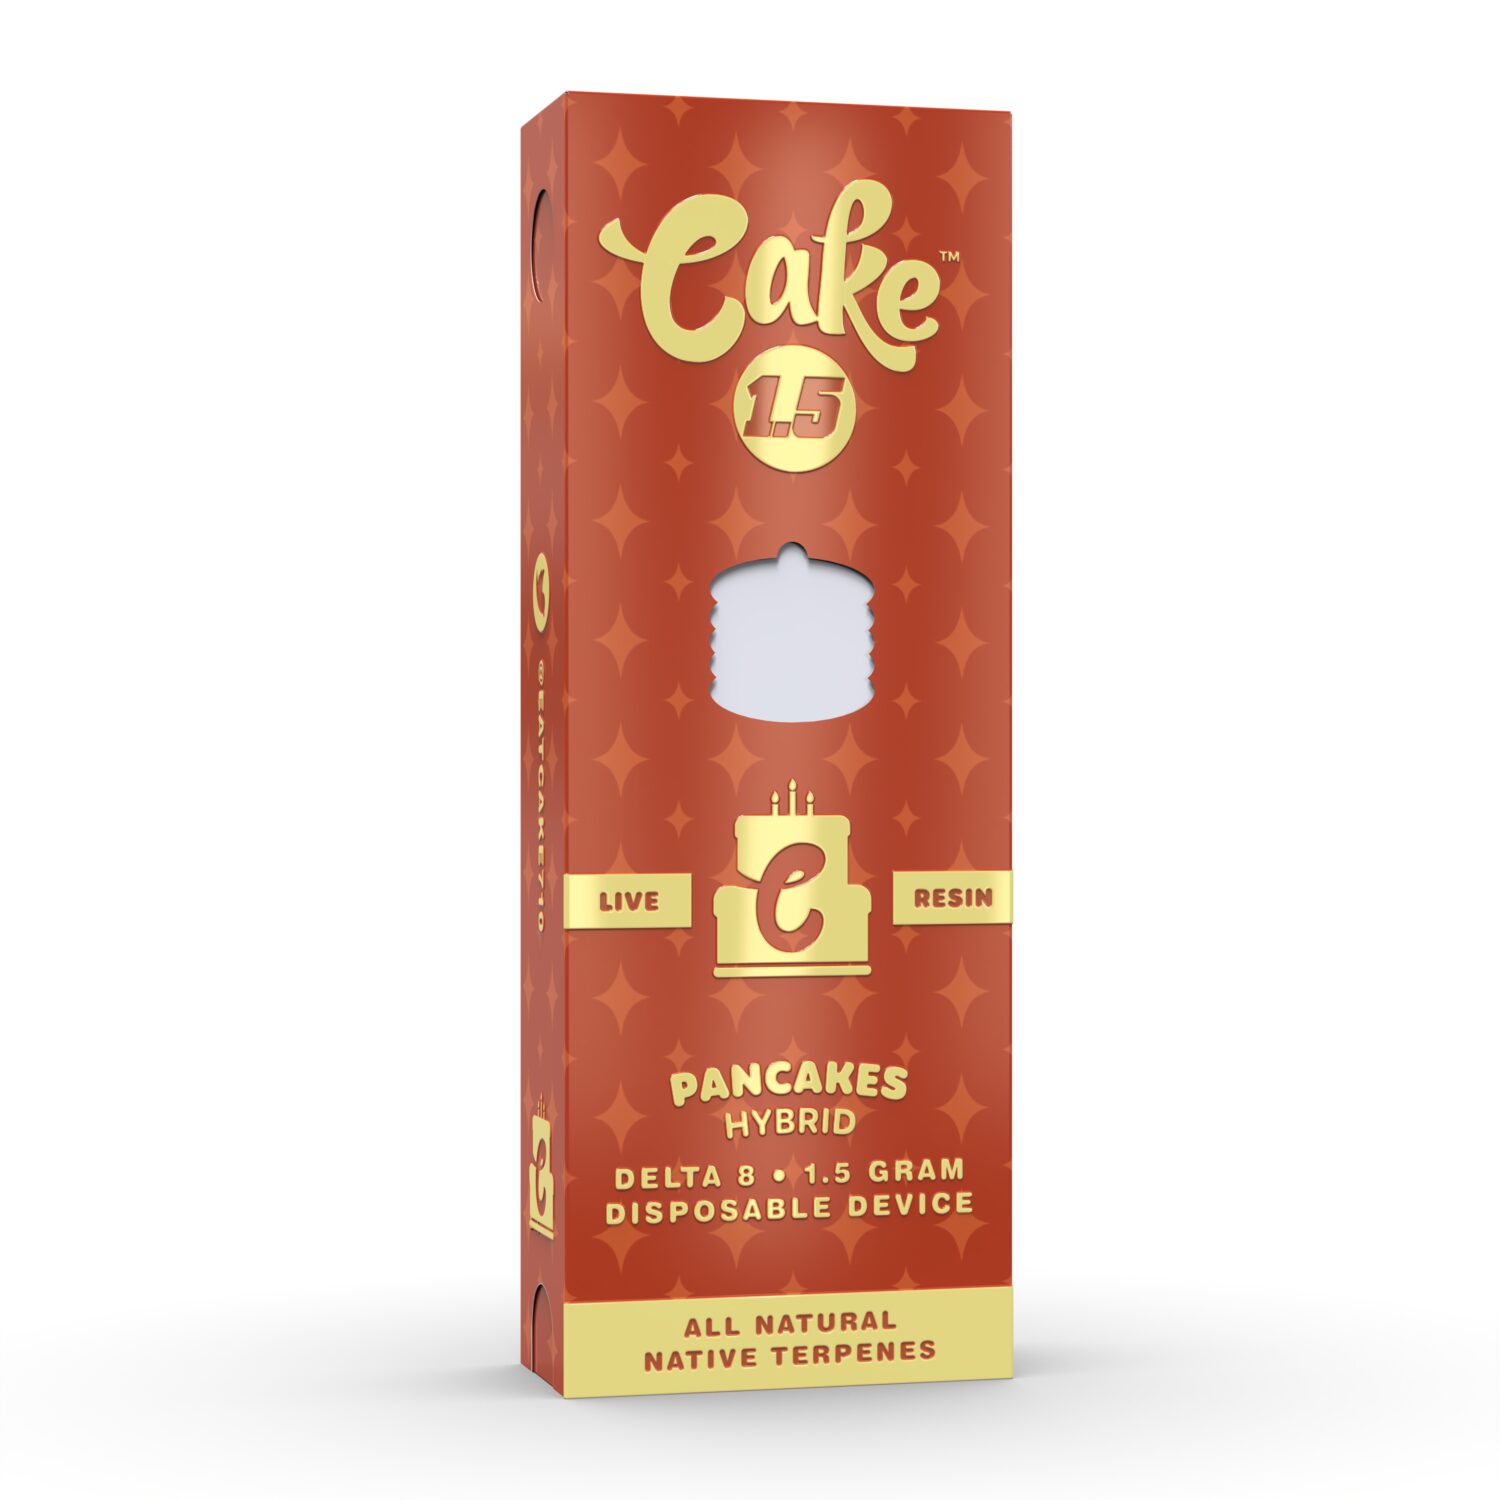 Cake-Delta-8-Live-Resin-Disposable-1.5g-Pancakes-scaled-1.jpg